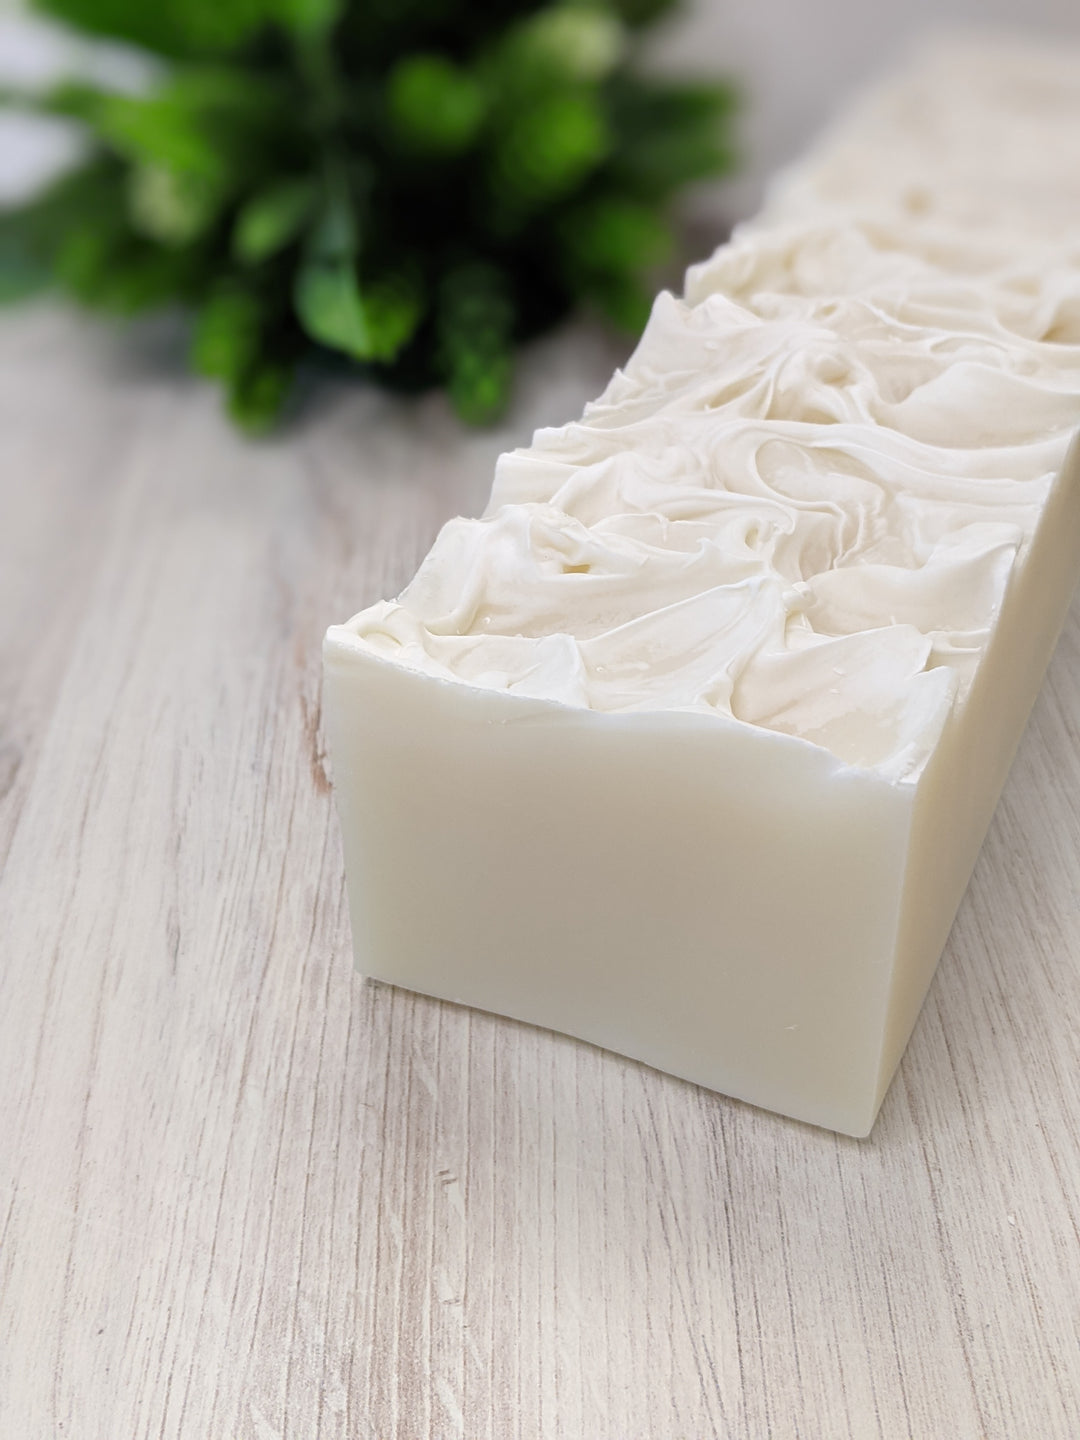 Natural Plain Soap